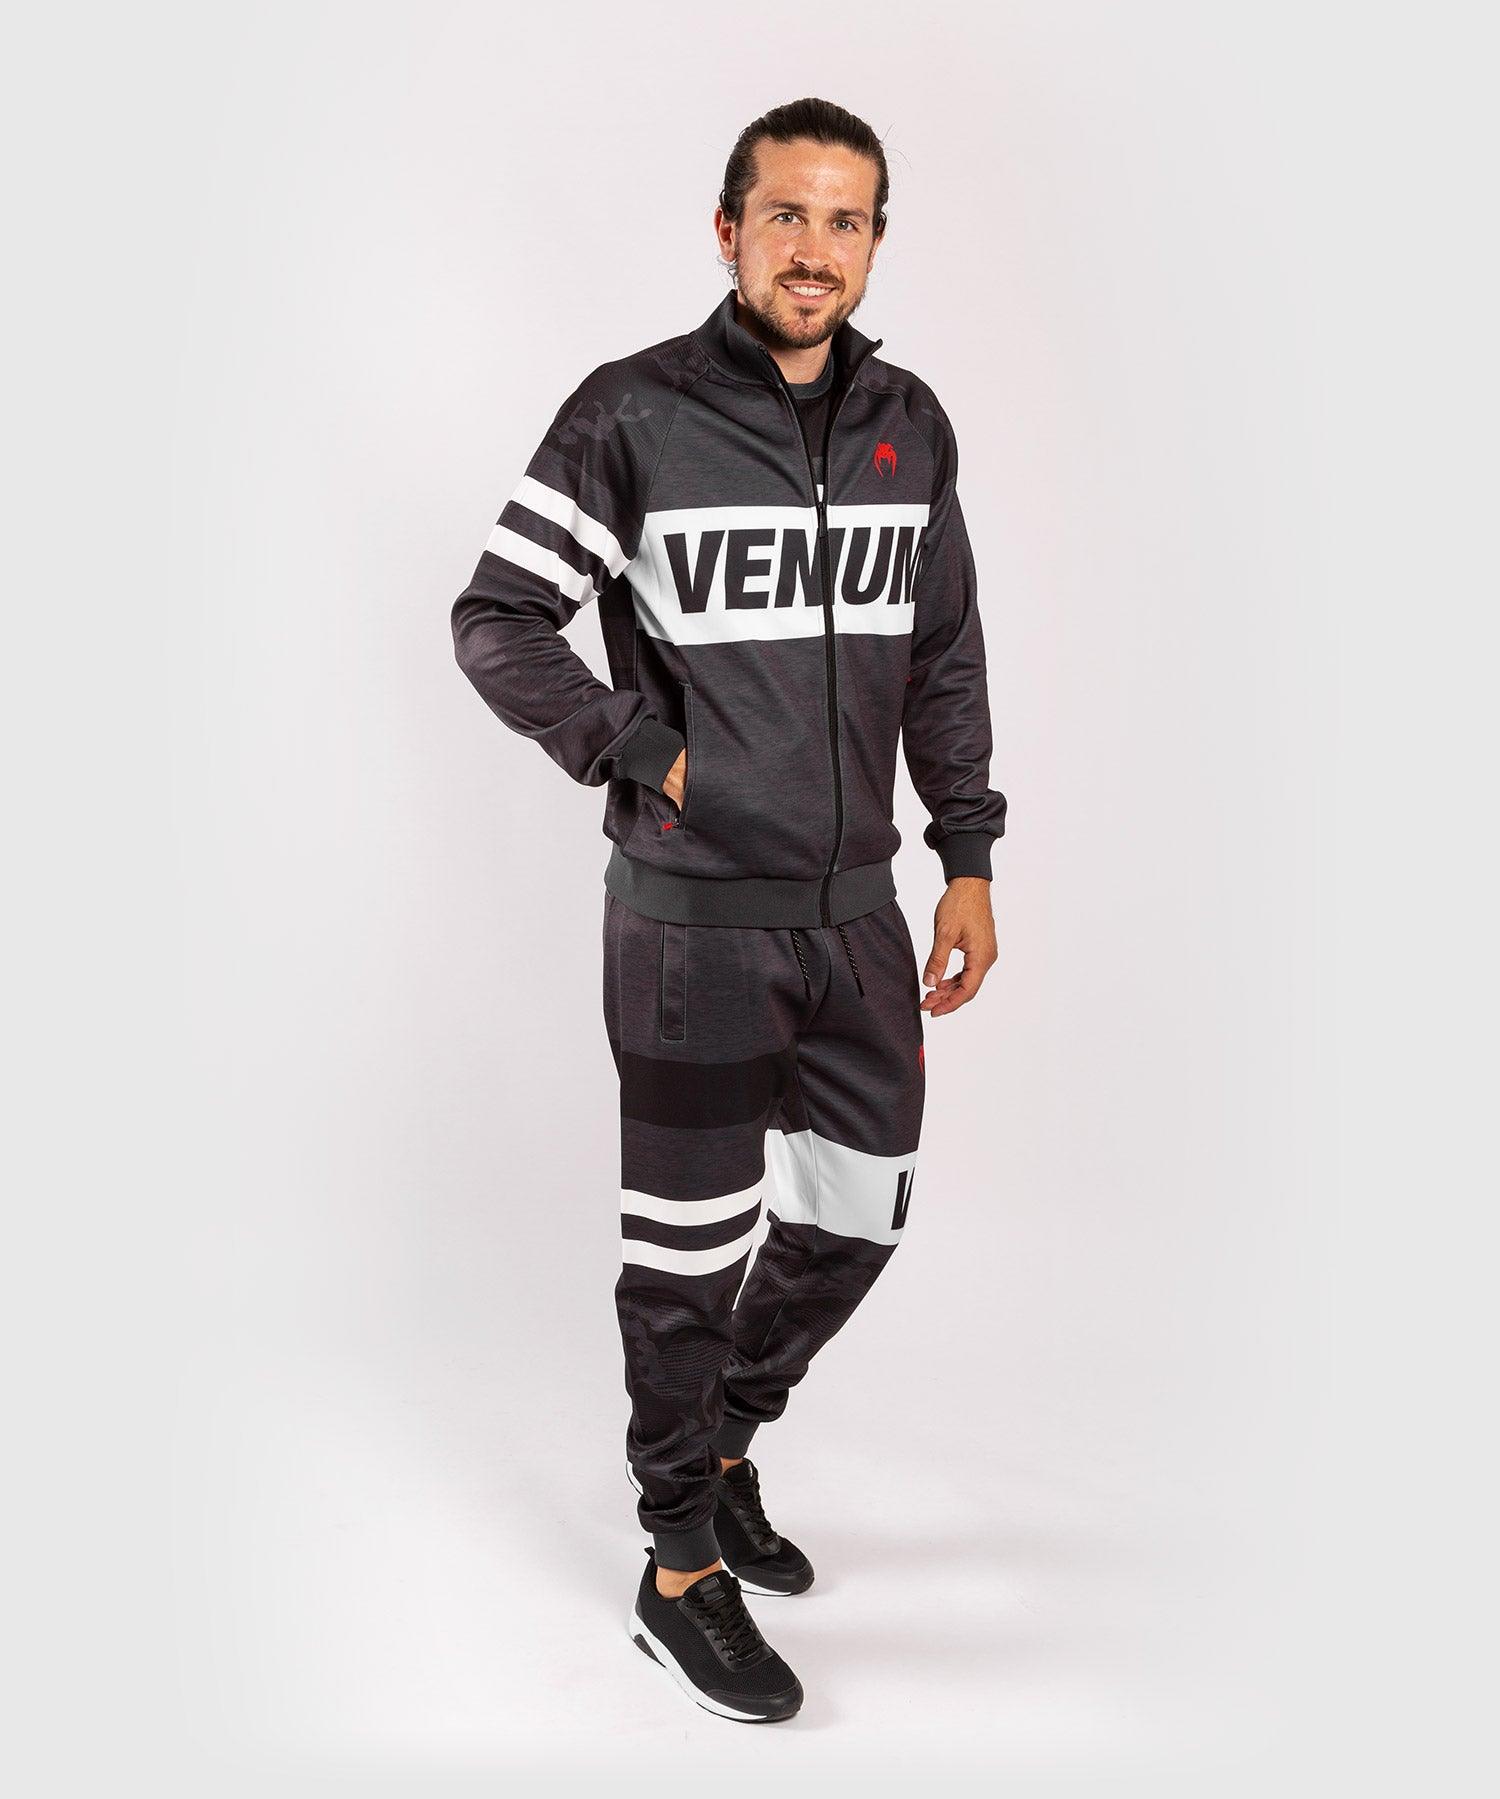 Venum Bandit Sweatshirt - Black/Grey Picture 9